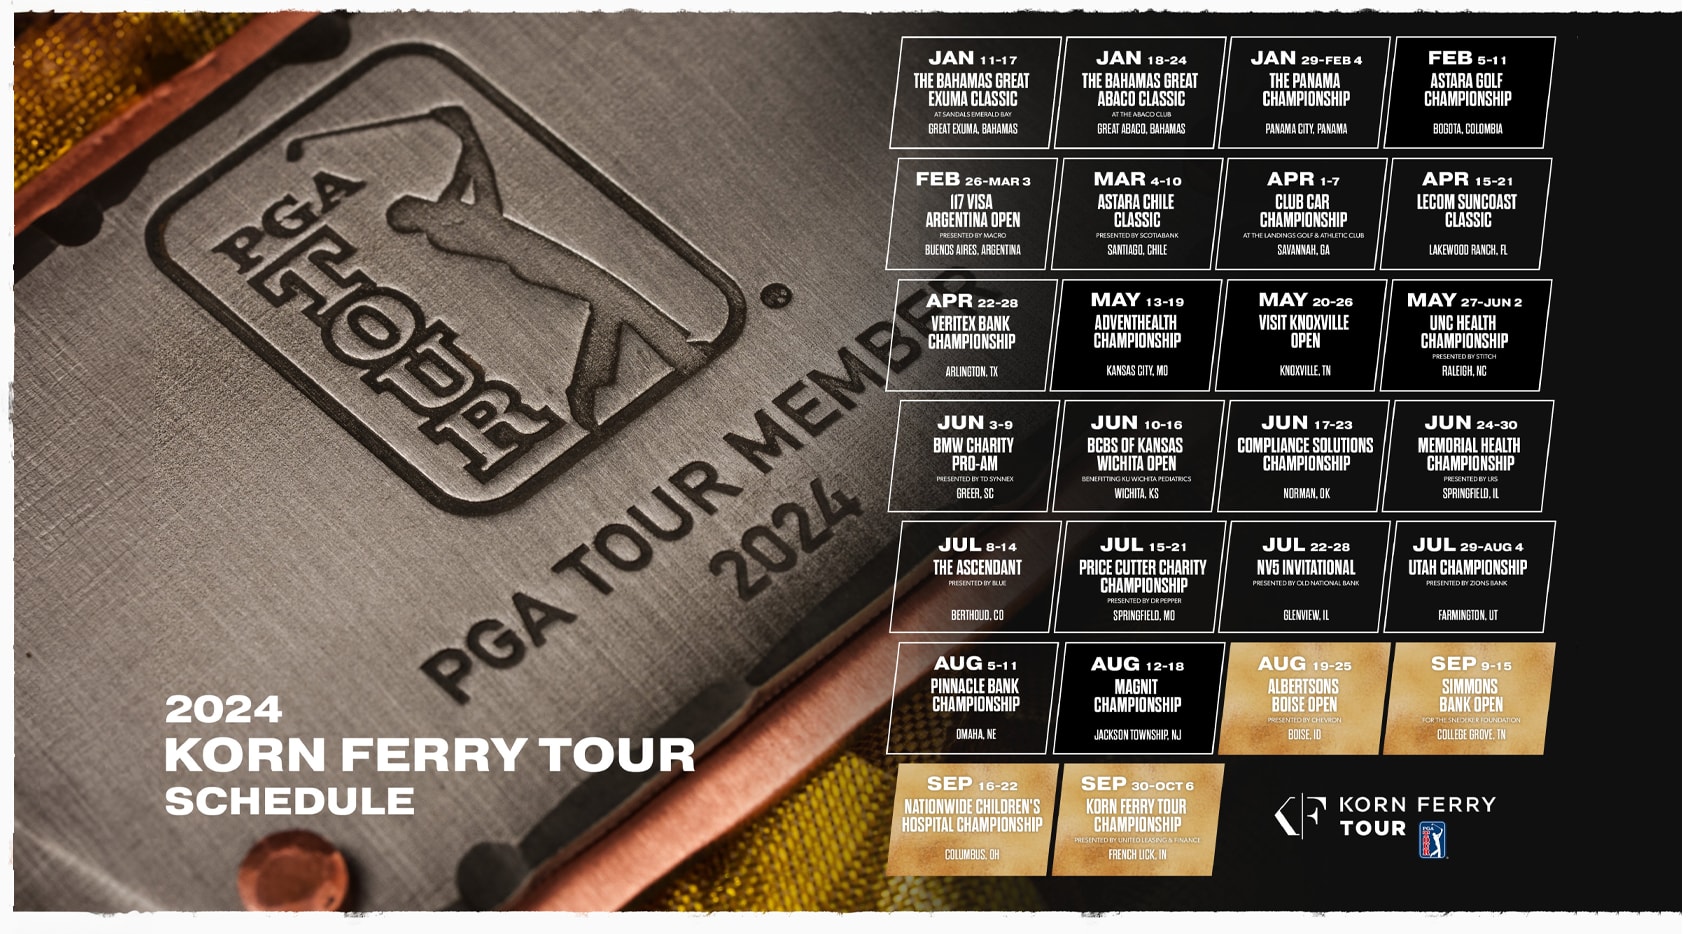 korn ferry tour 2024 schedule release date